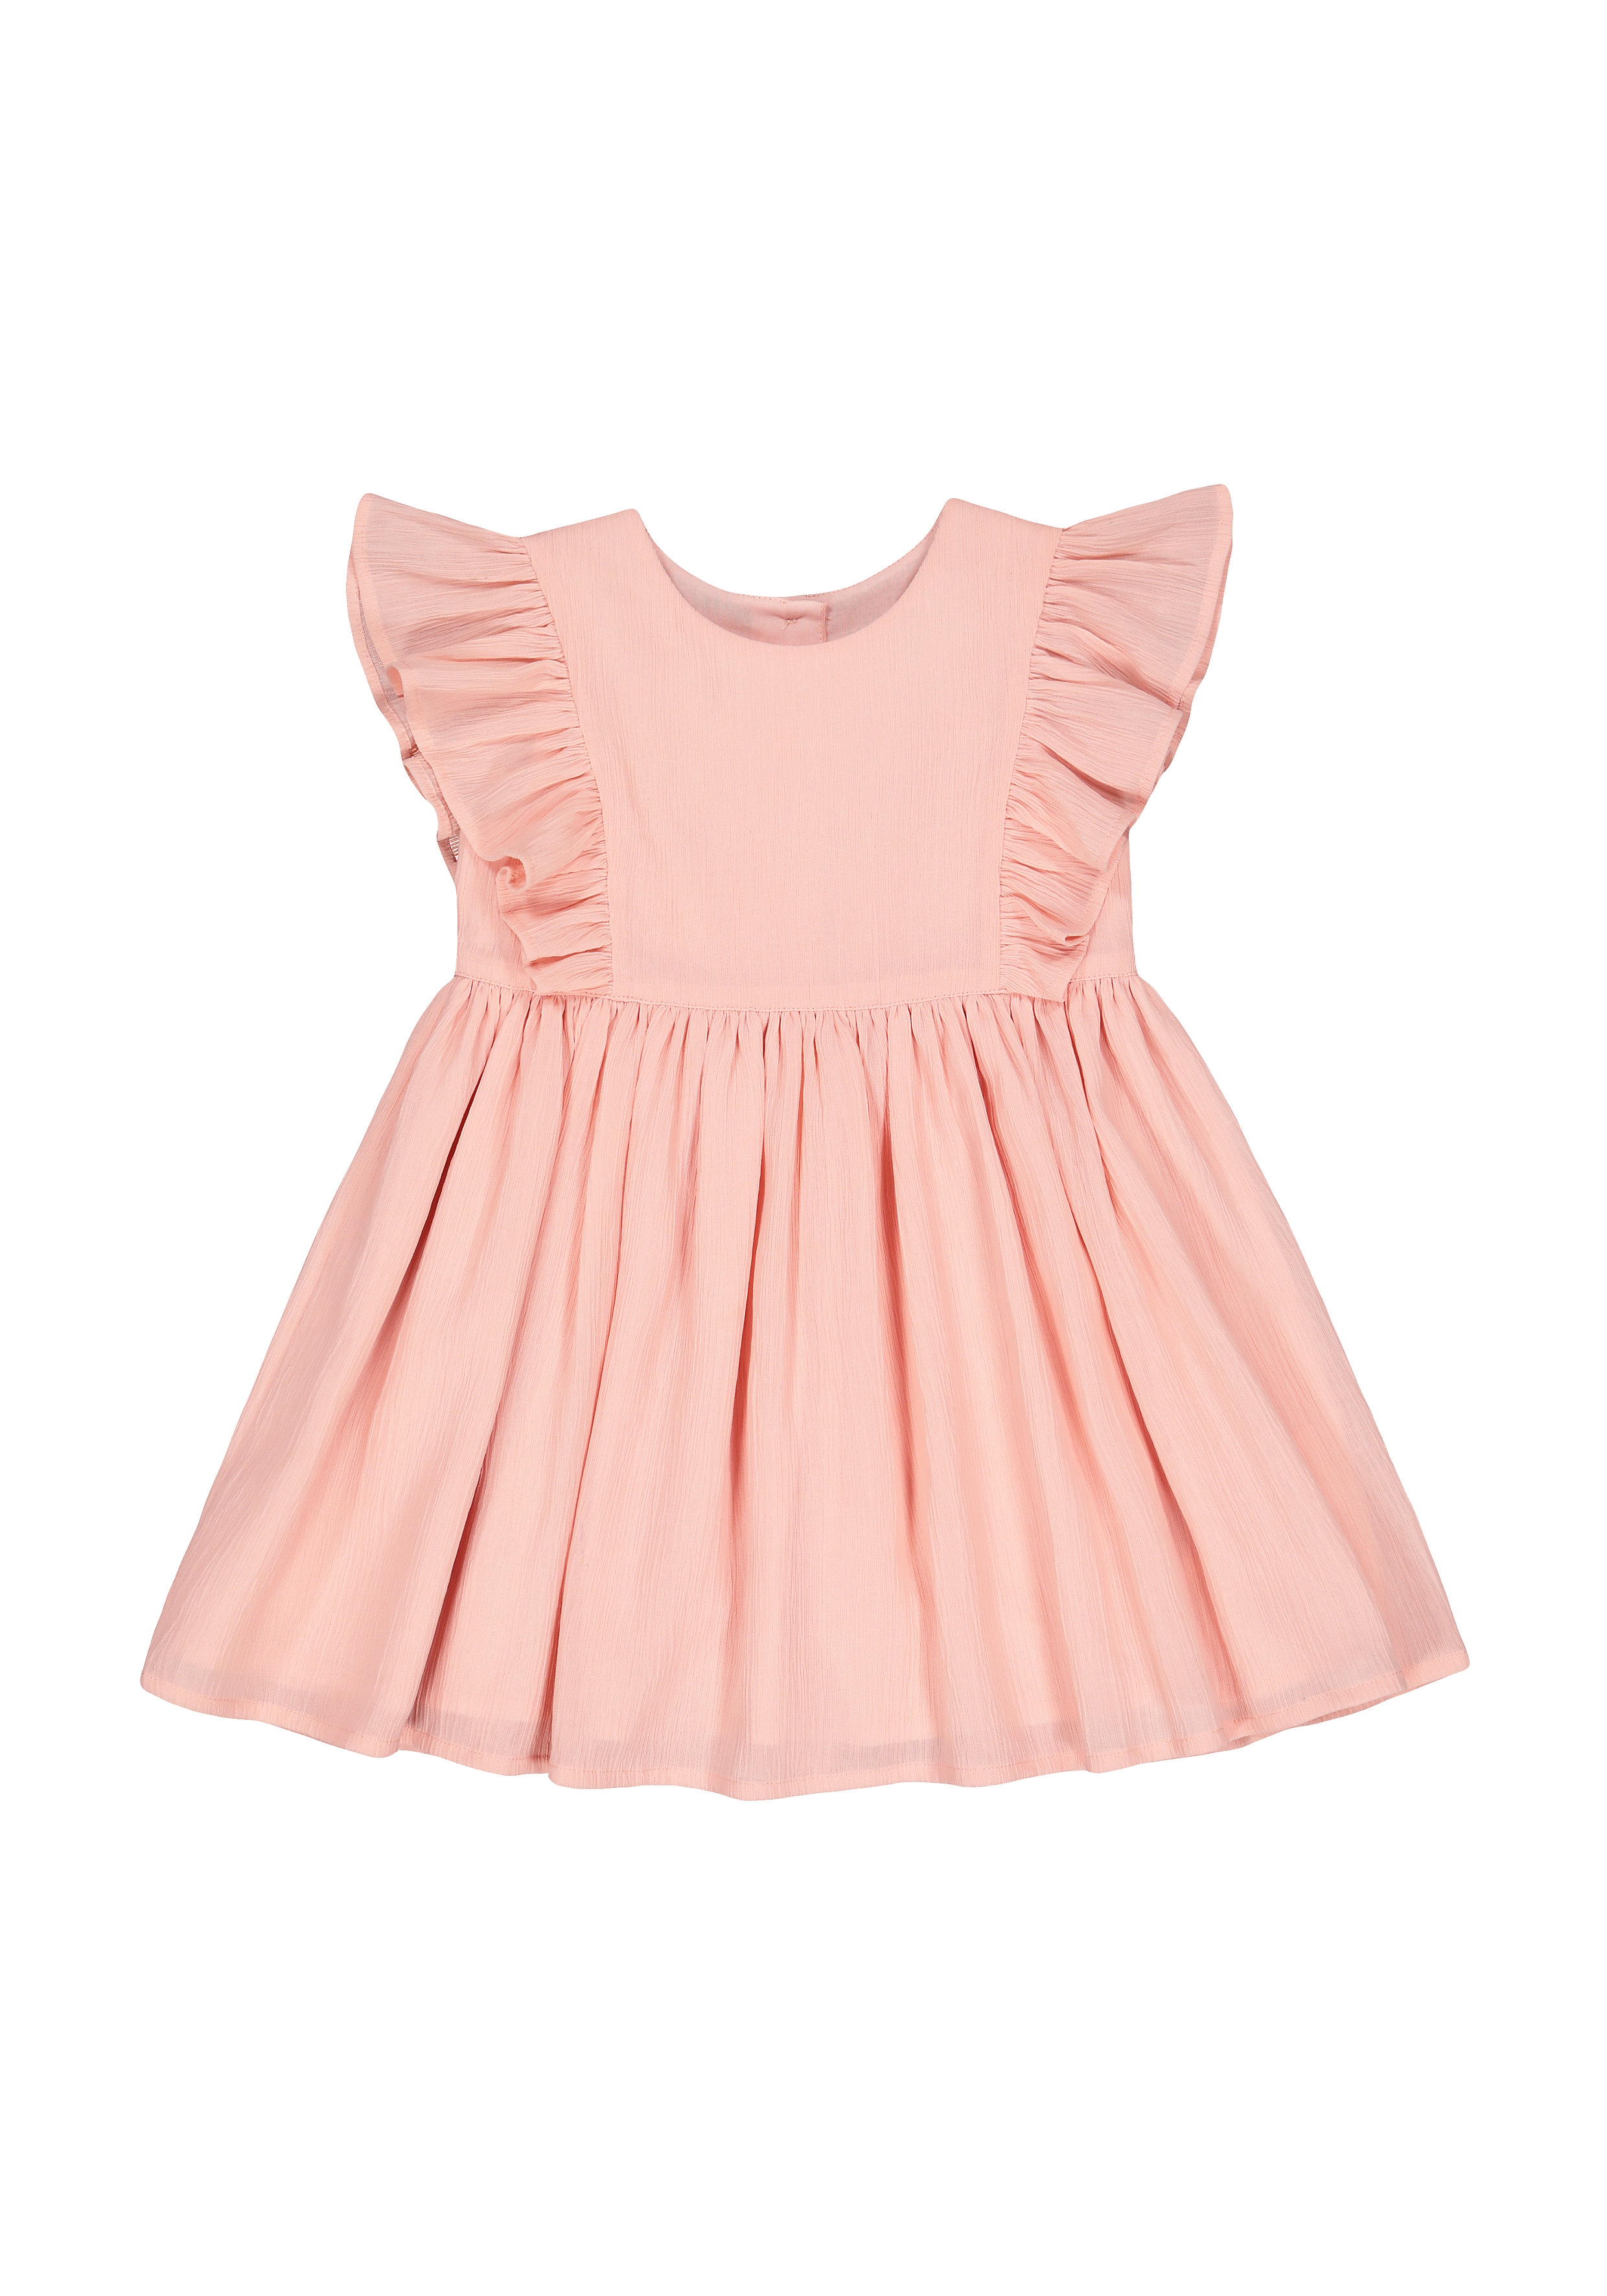 Mothercare | Girls Sleeveless Dress Frill Detail - Pink